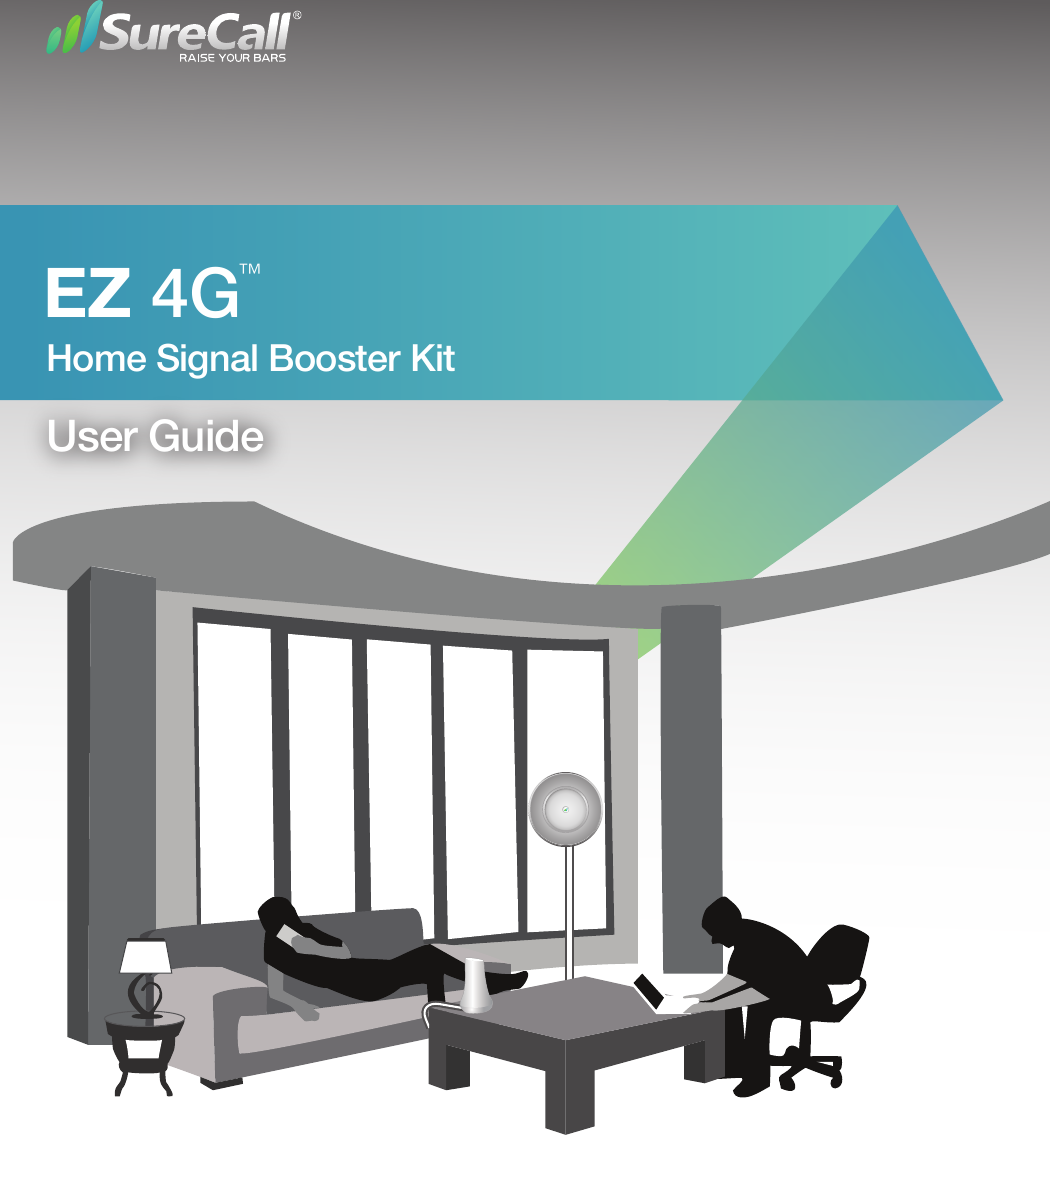  EZ 4G    ™Home Signal Booster KitUser Guide 